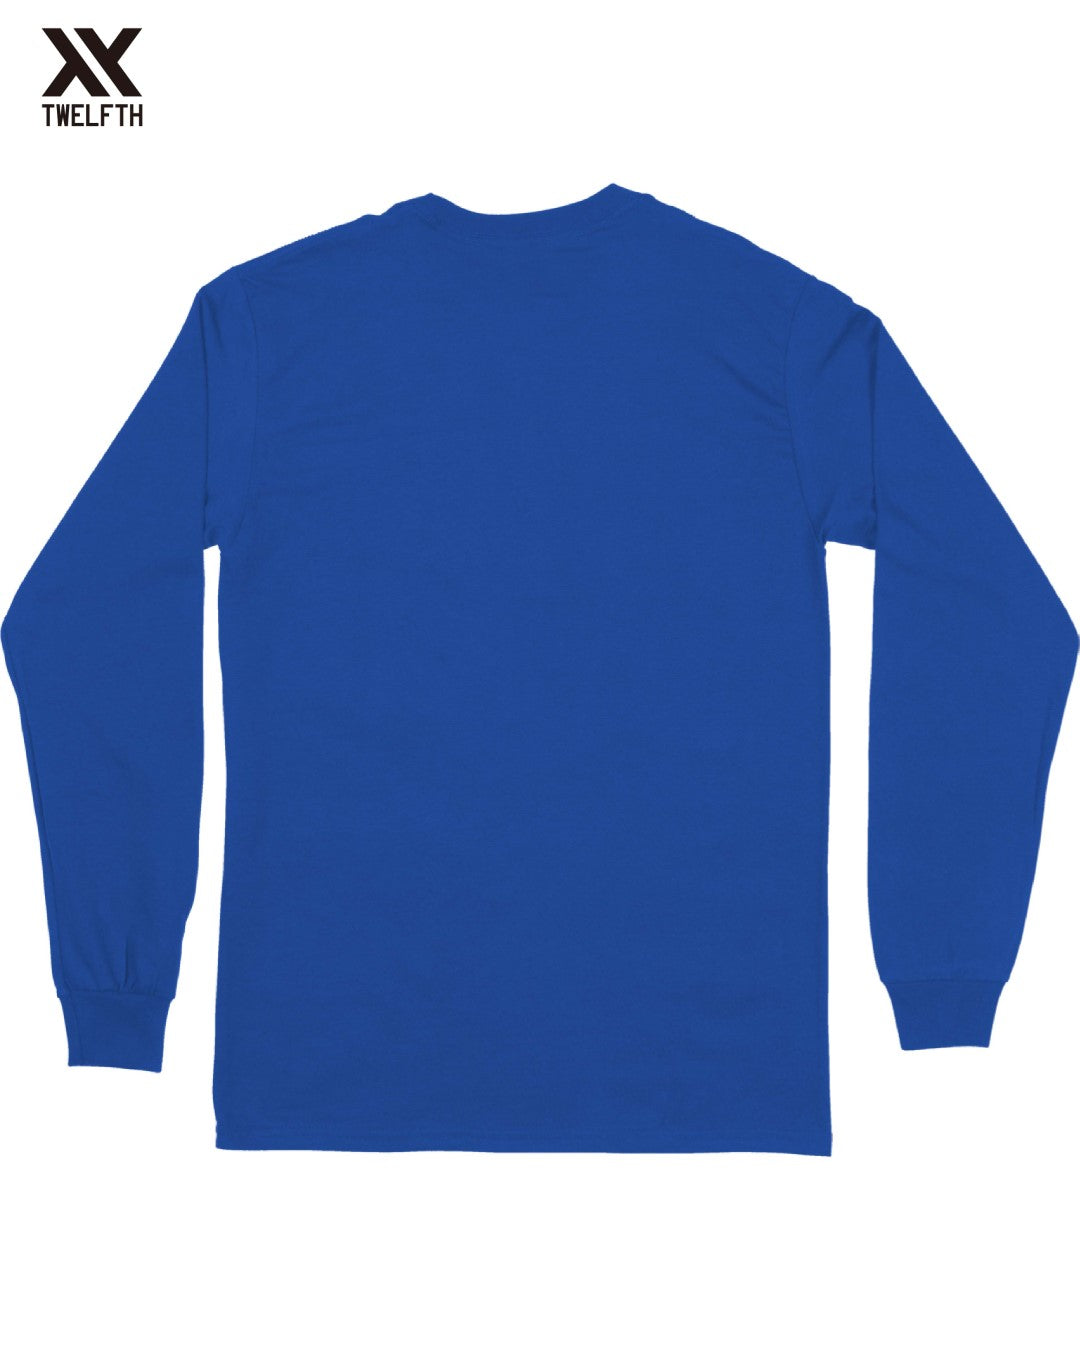 Sevilla Crest T-Shirt - Mens - Long Sleeve